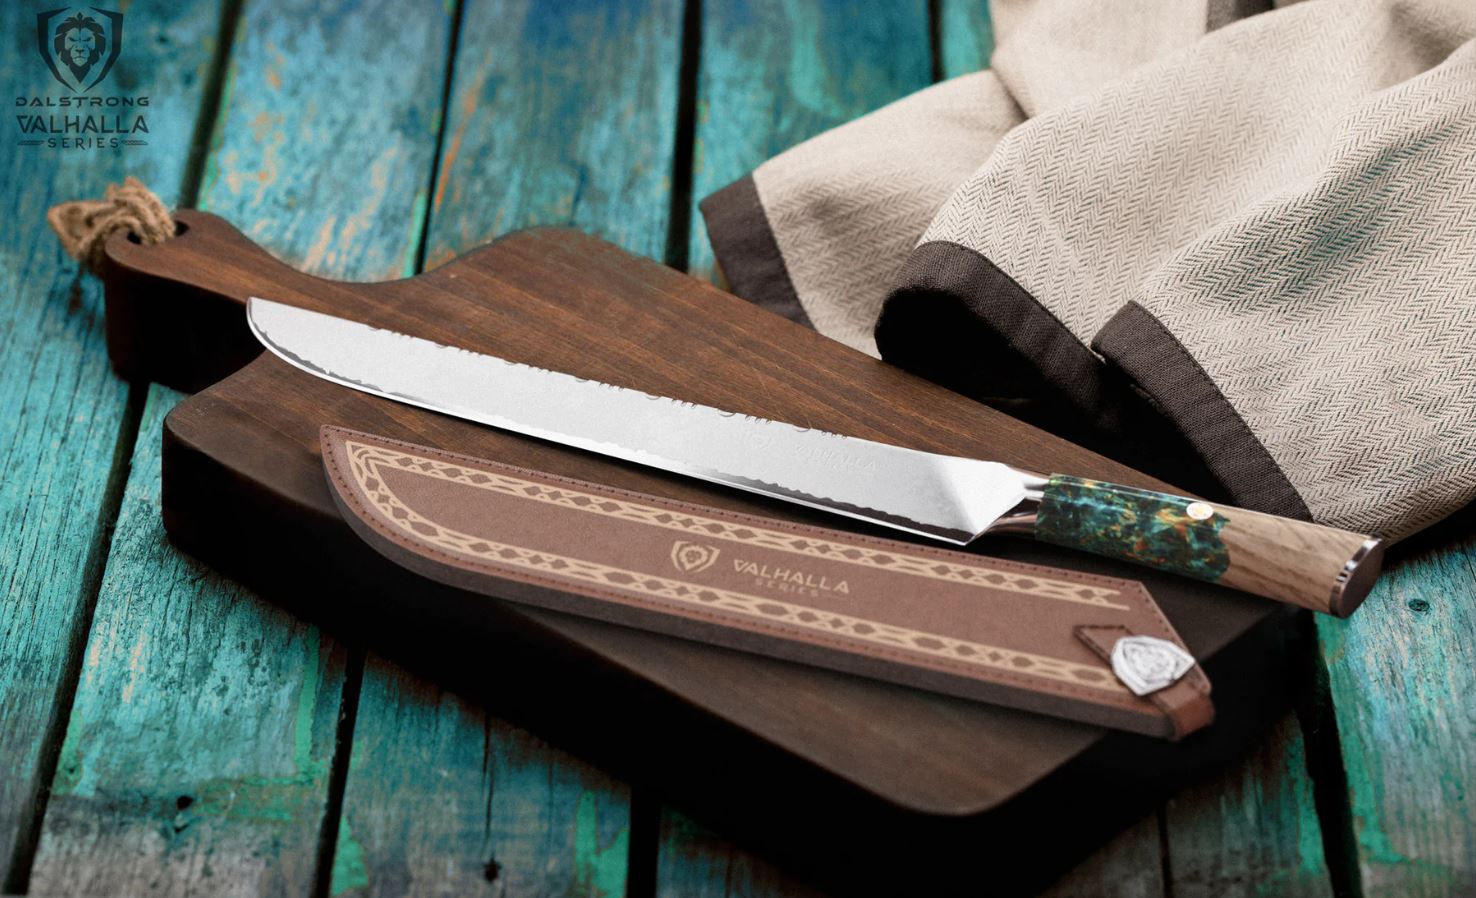 Wolf War Kitchen Ceramic Knife Set Professional Knife With Sheaths